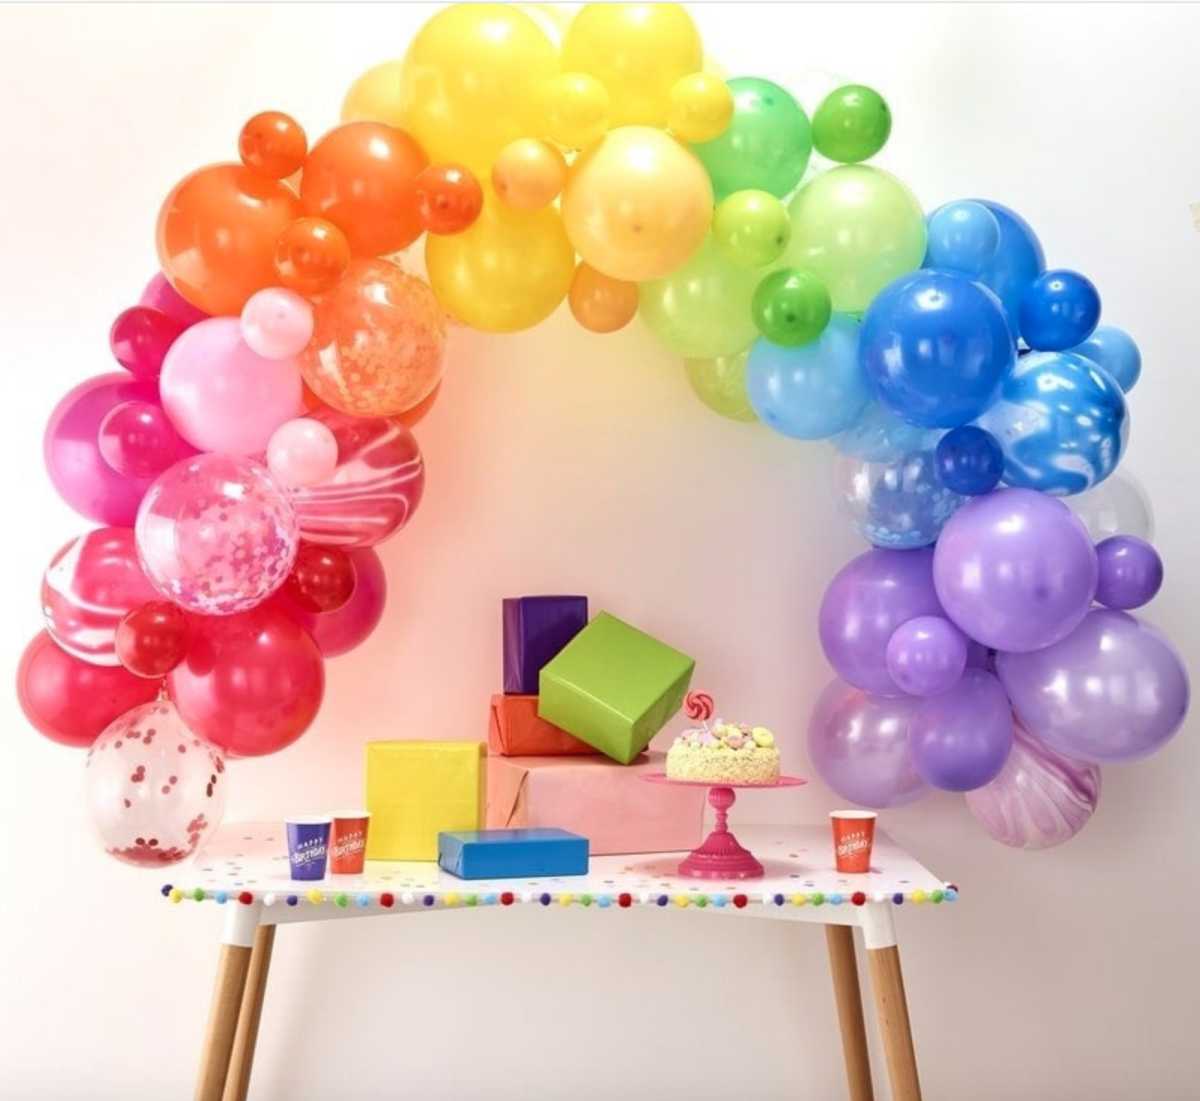 Rainbow Baby Birthday Party Ideas That Are Bursting With Joy 